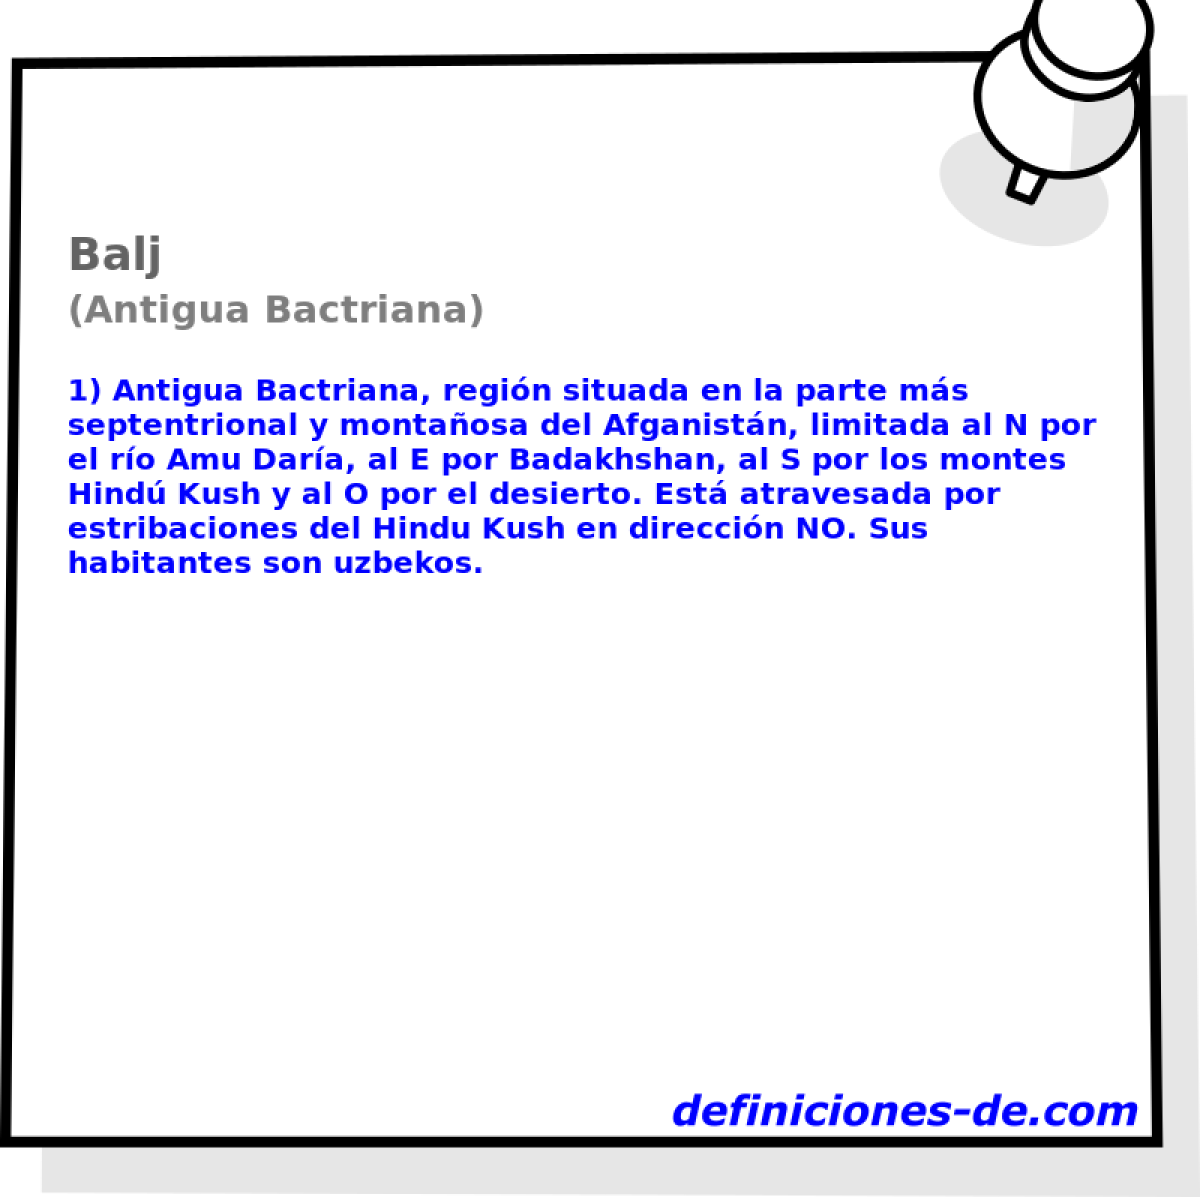 Balj (Antigua Bactriana)